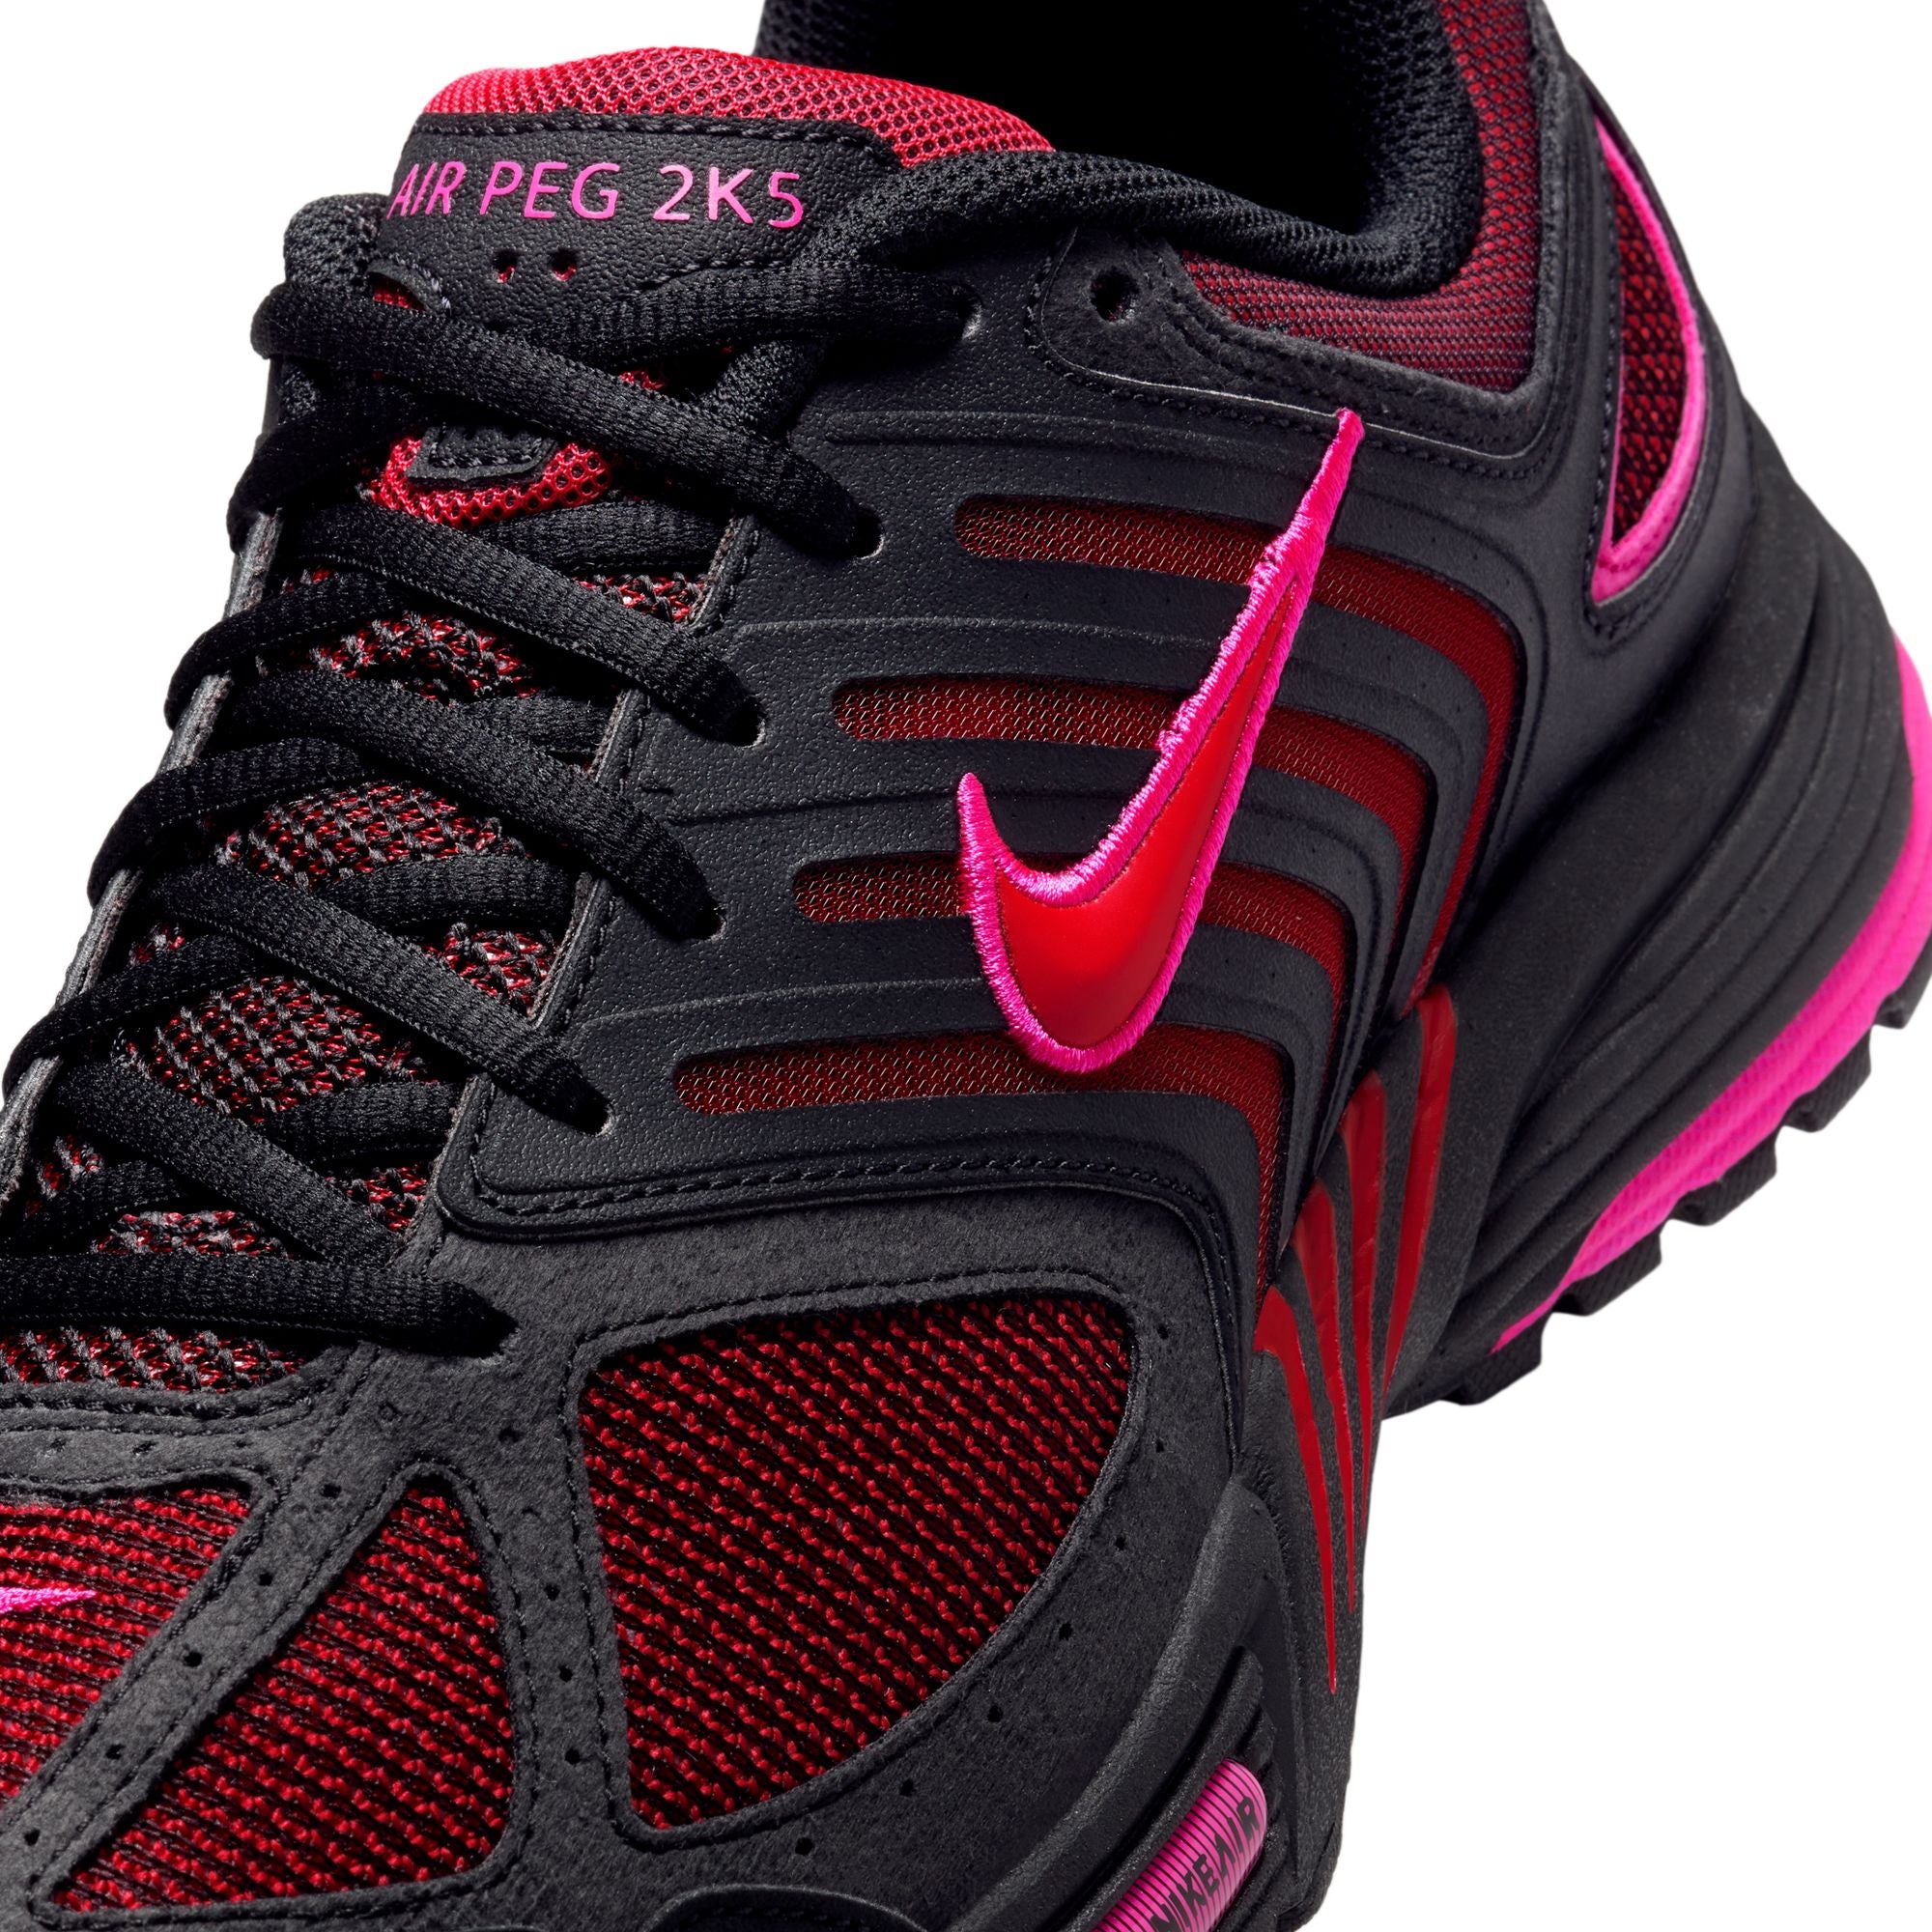 NIKE - Nike Air Peg 2K5 - (Black/Fire Red-Fierce Pink-Fie) view 9